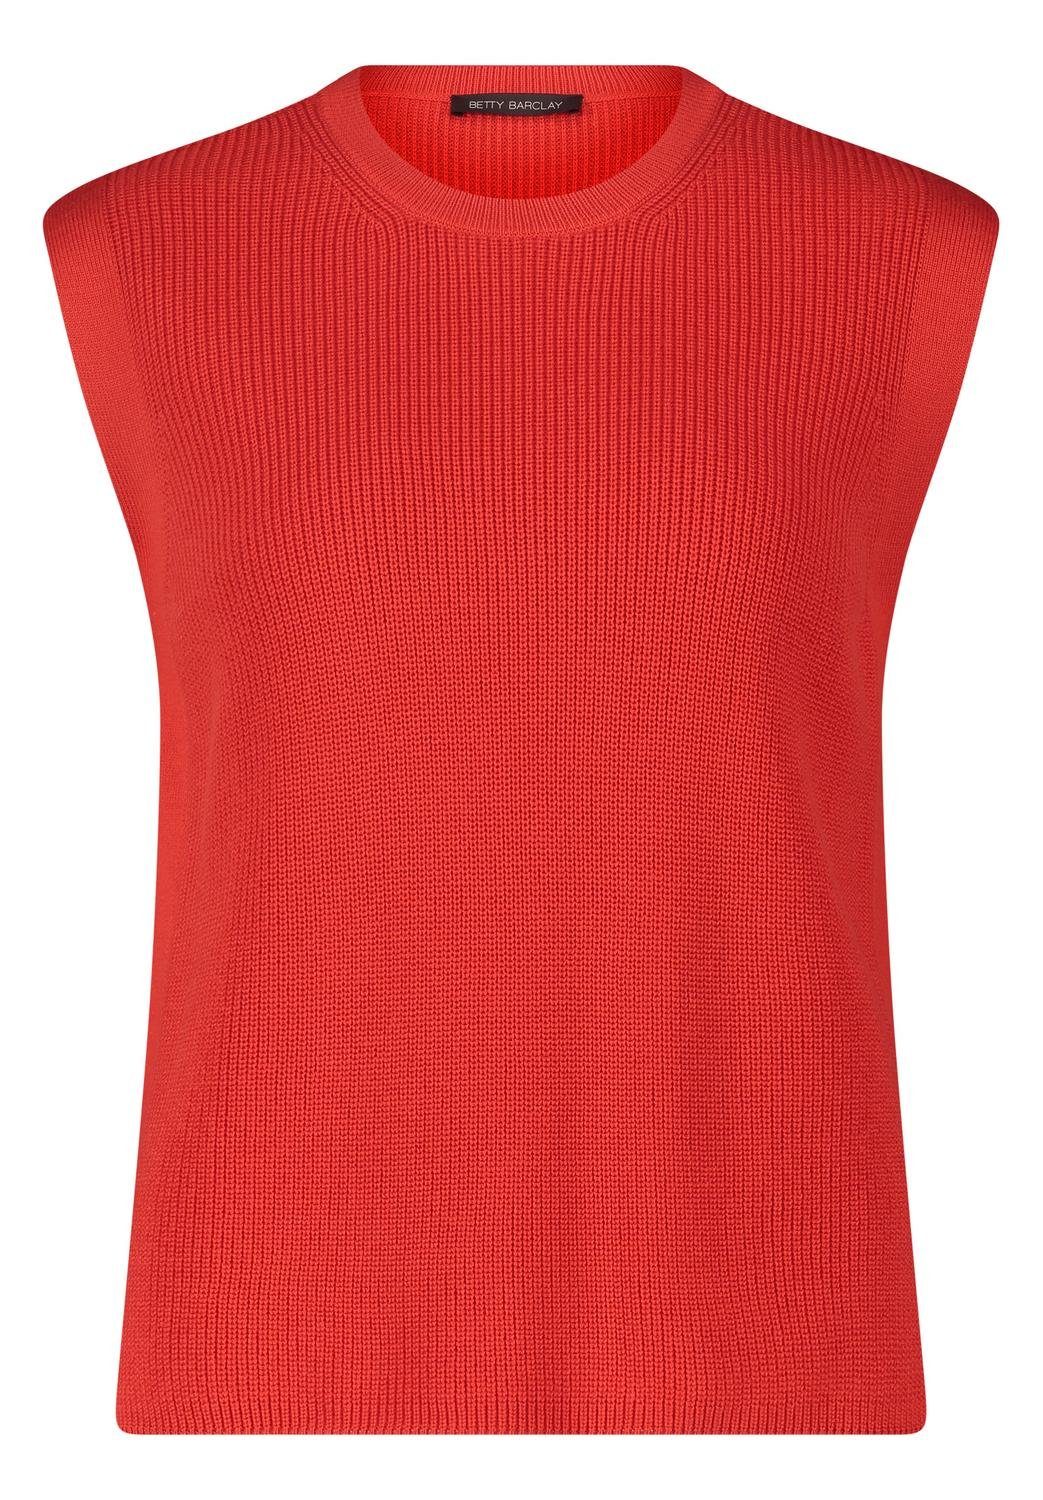 Betty Barclay Sweatshirt Strickpullover Kurz ohne Arm, Poppy Red